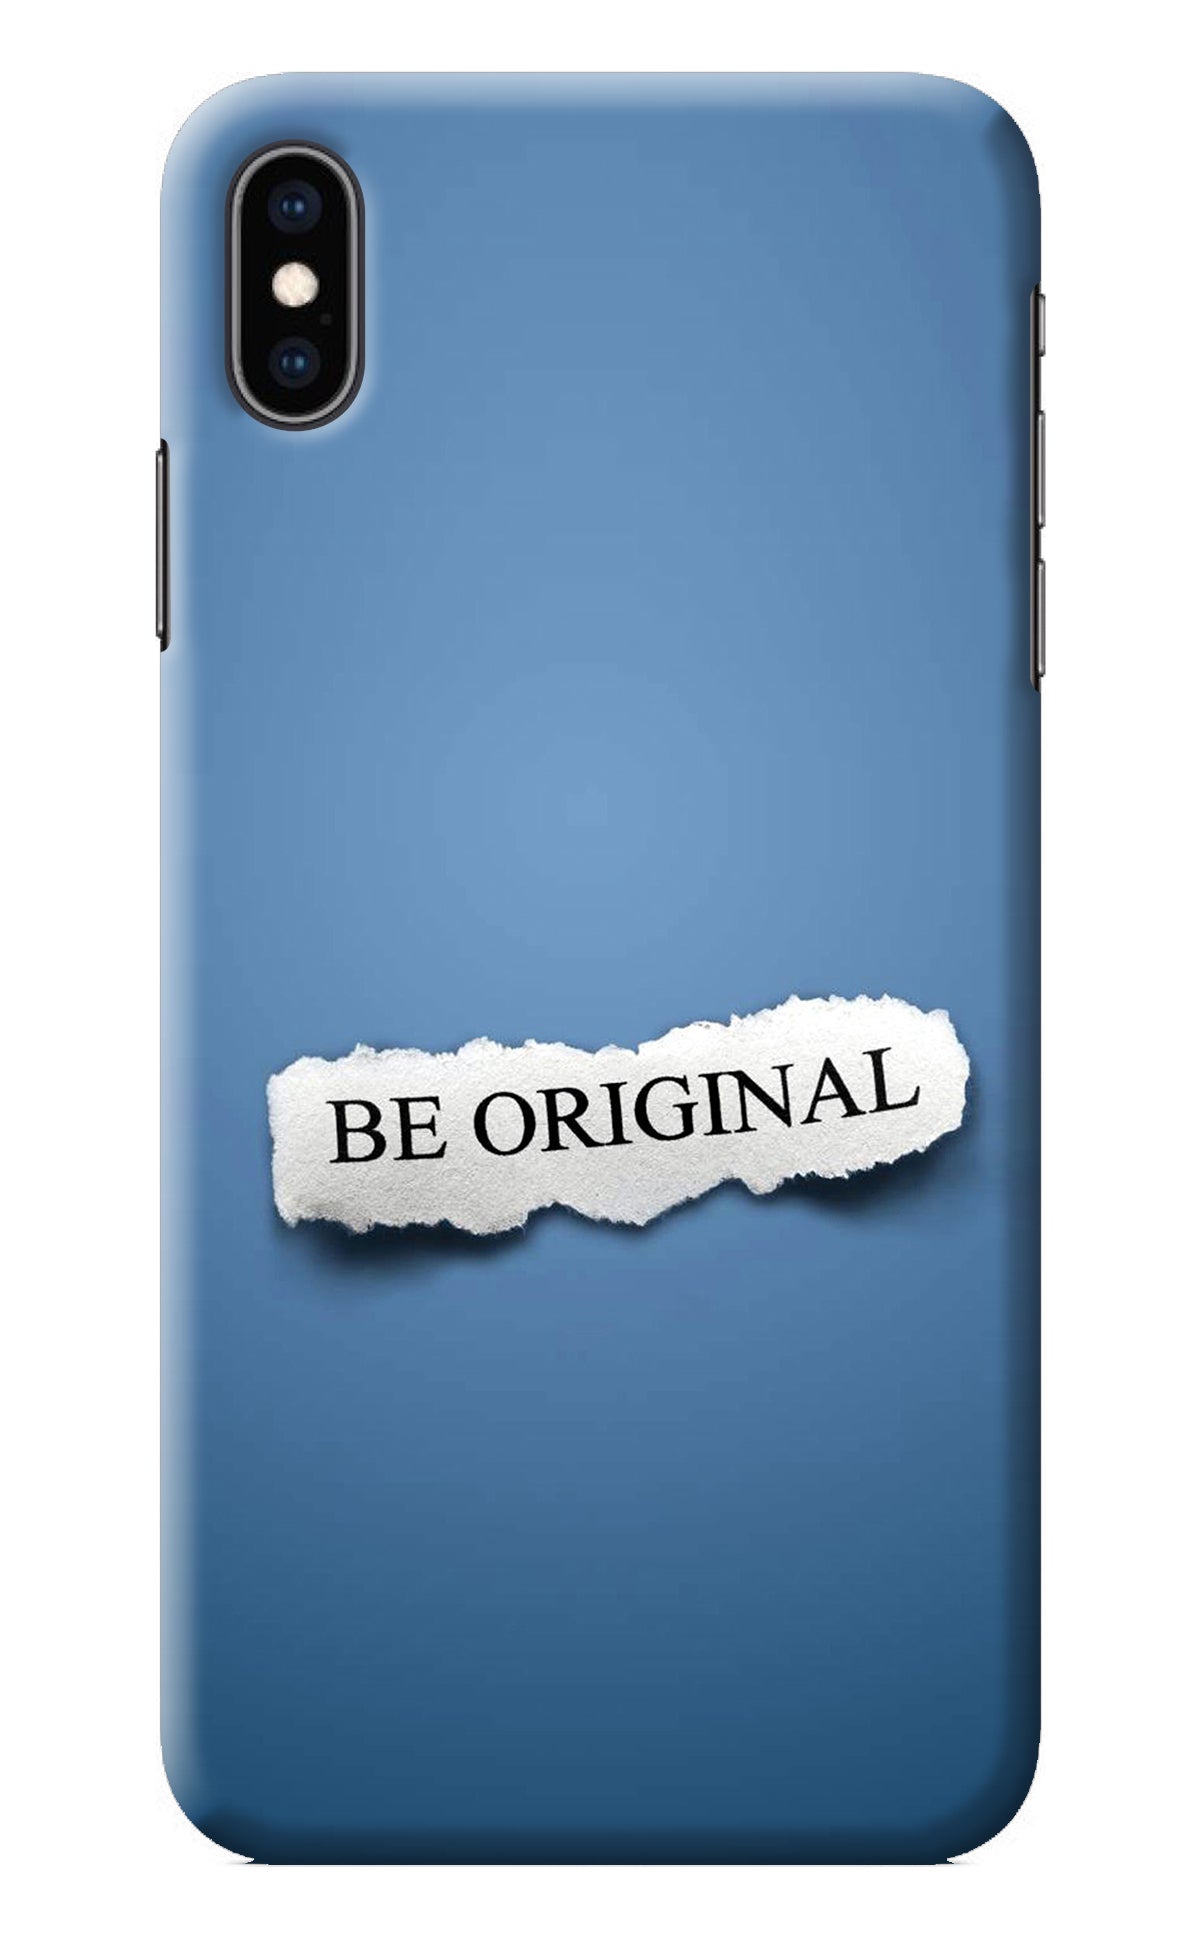 Be Original iPhone XS Max Back Cover